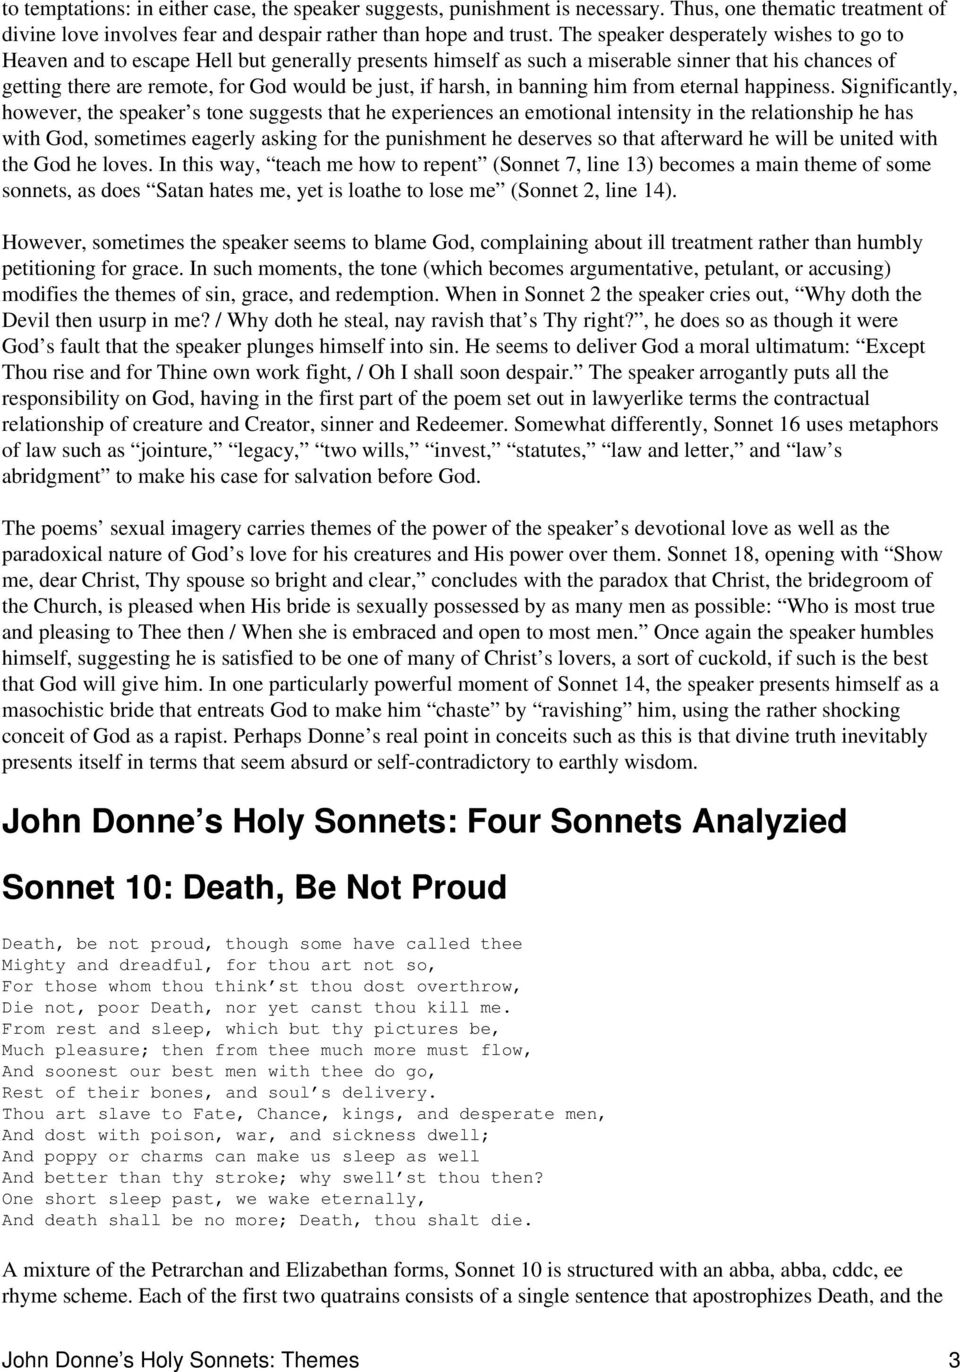 holy sonnet 10